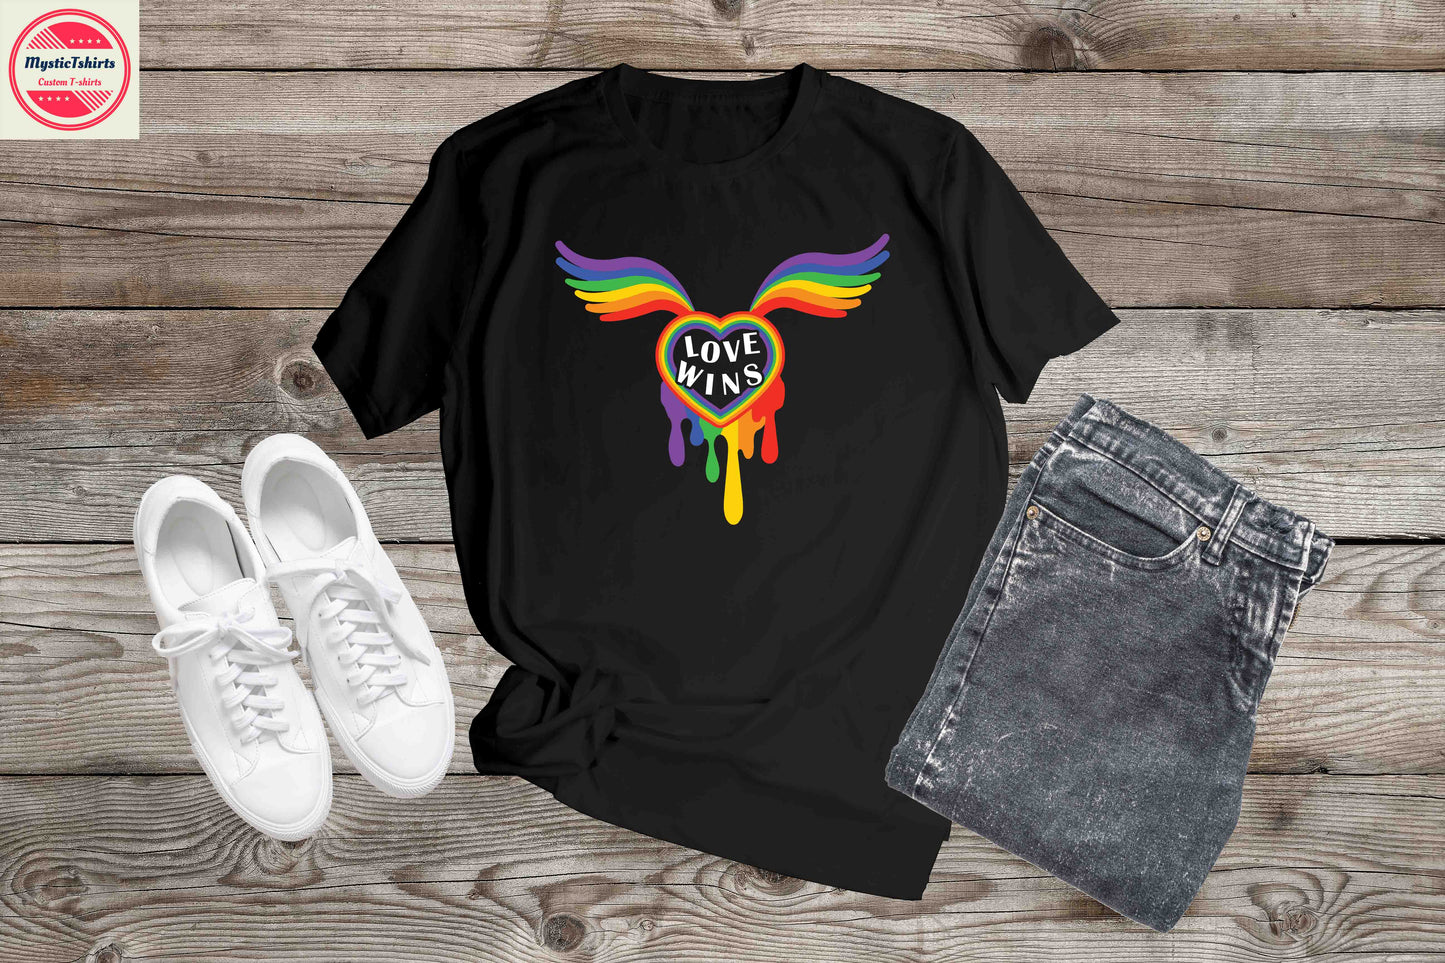 Copy of 48. Pride, Love Wins, Custom Made Shirt, Personalized T-Shirt, Custom Text, Make Your Own Shirt, Custom Tee